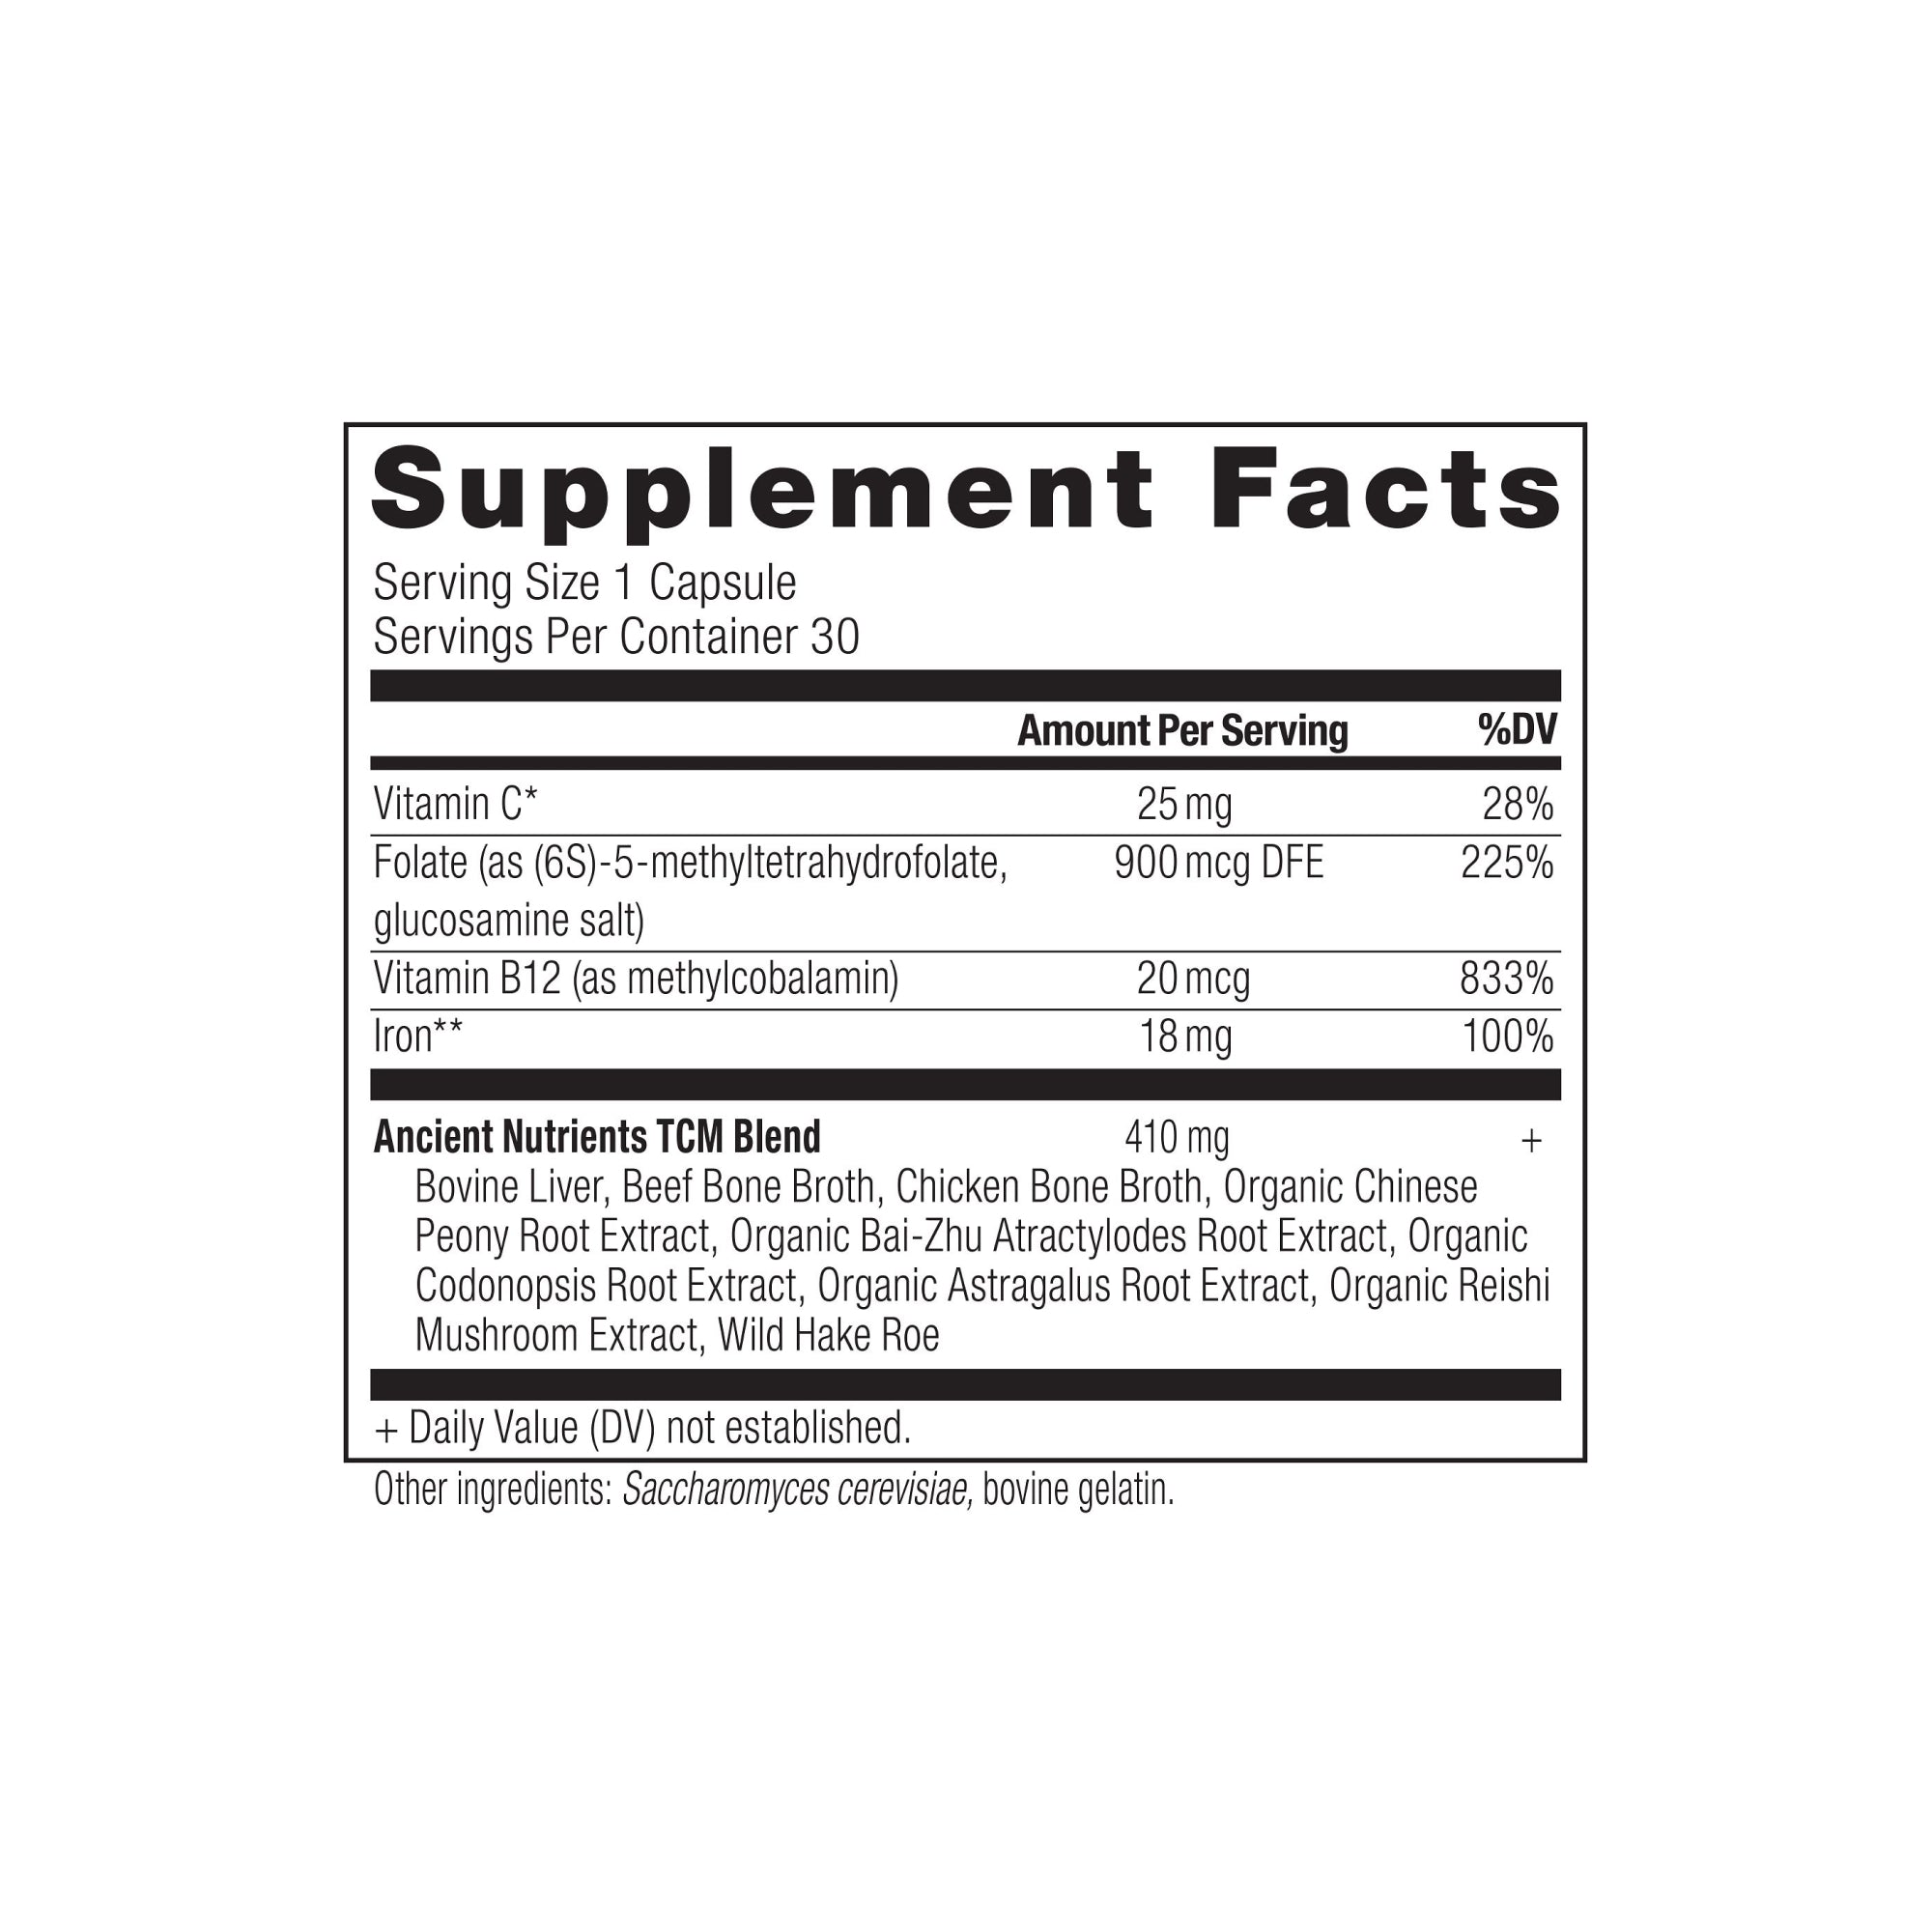 ancient nutrients iron supplement label